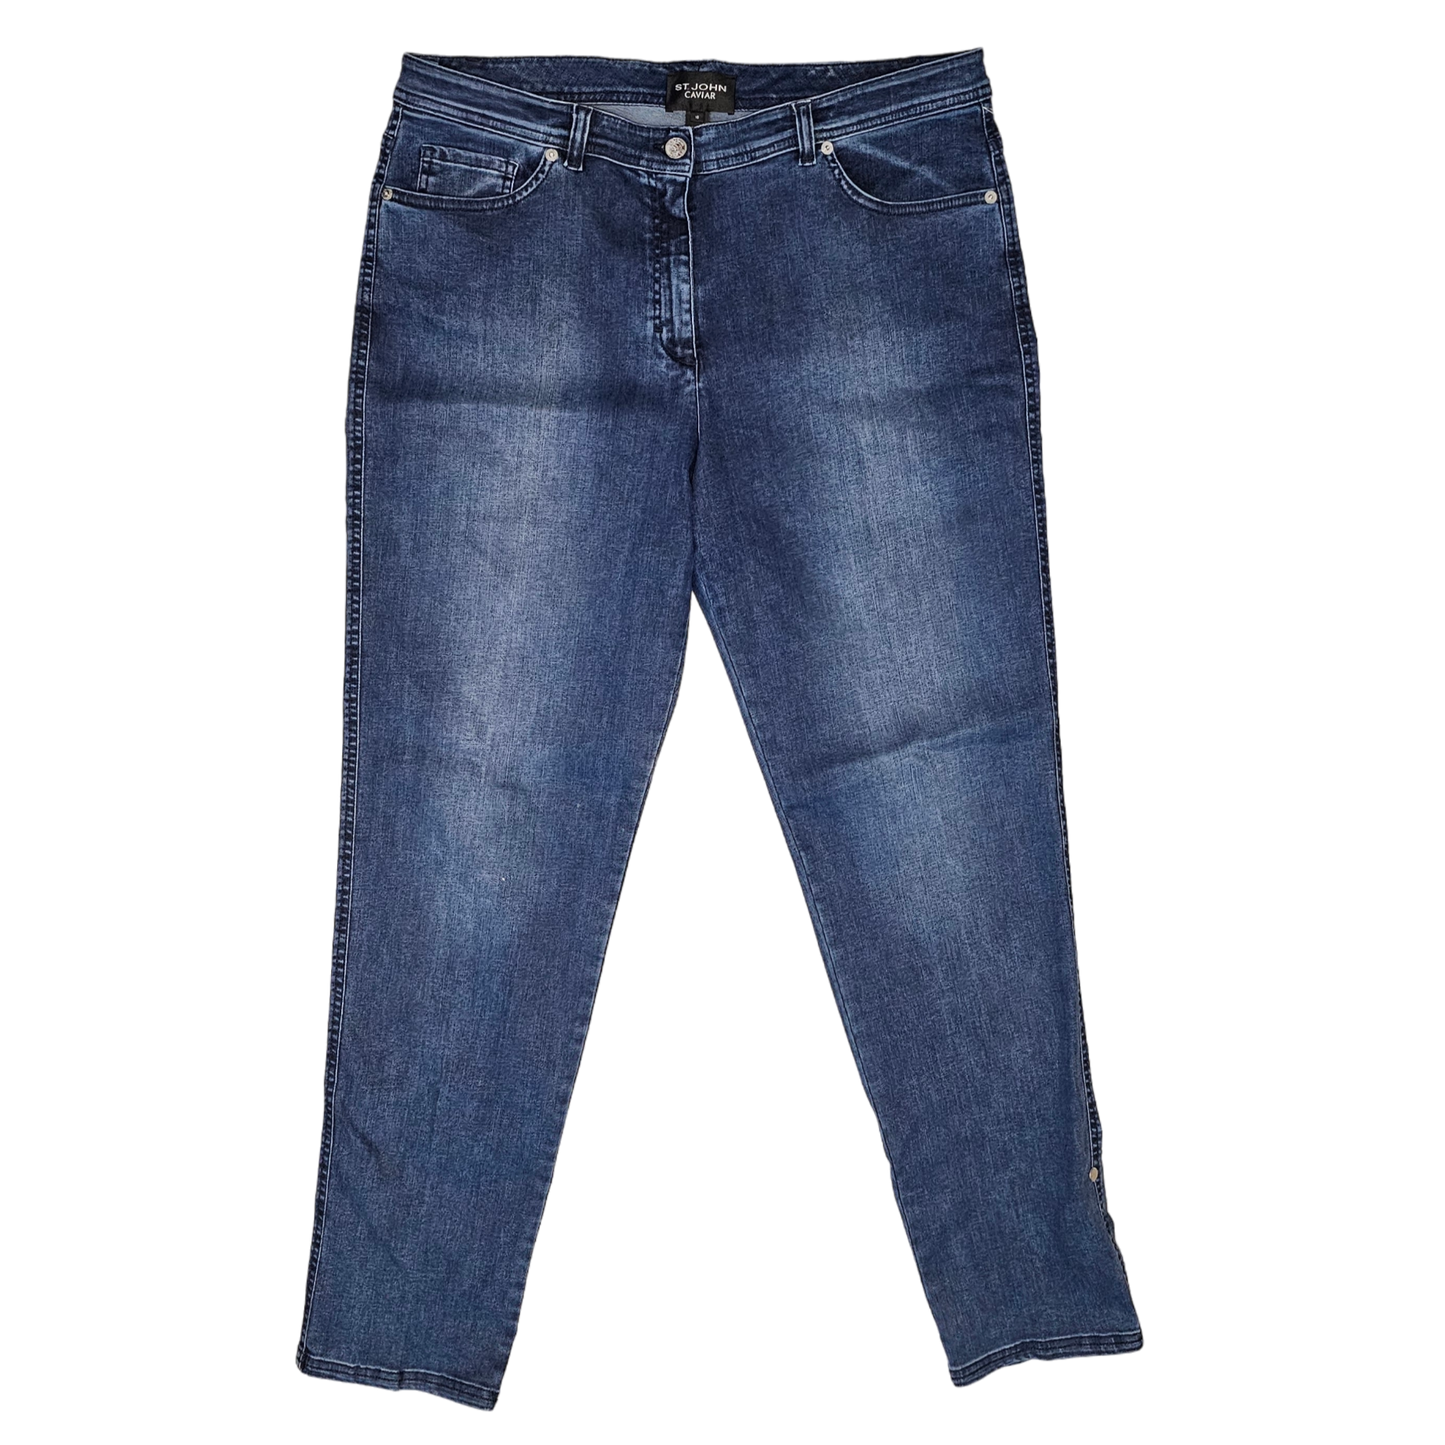 Jeans Designer By St. John  Size: 16